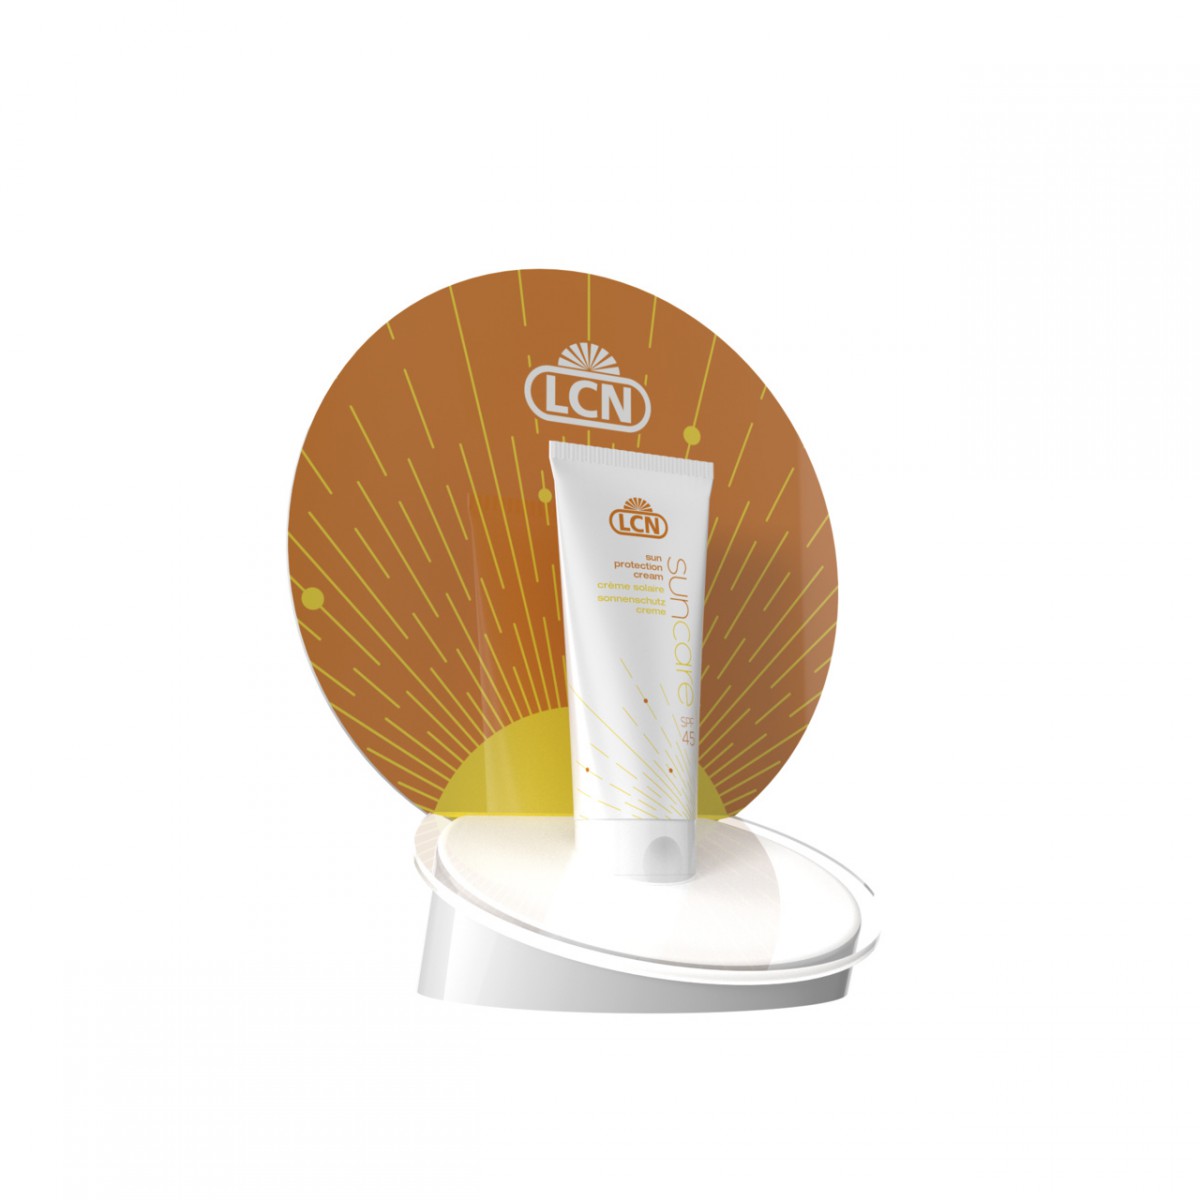 LCN Sun care cream SPF45 - DISPLAY